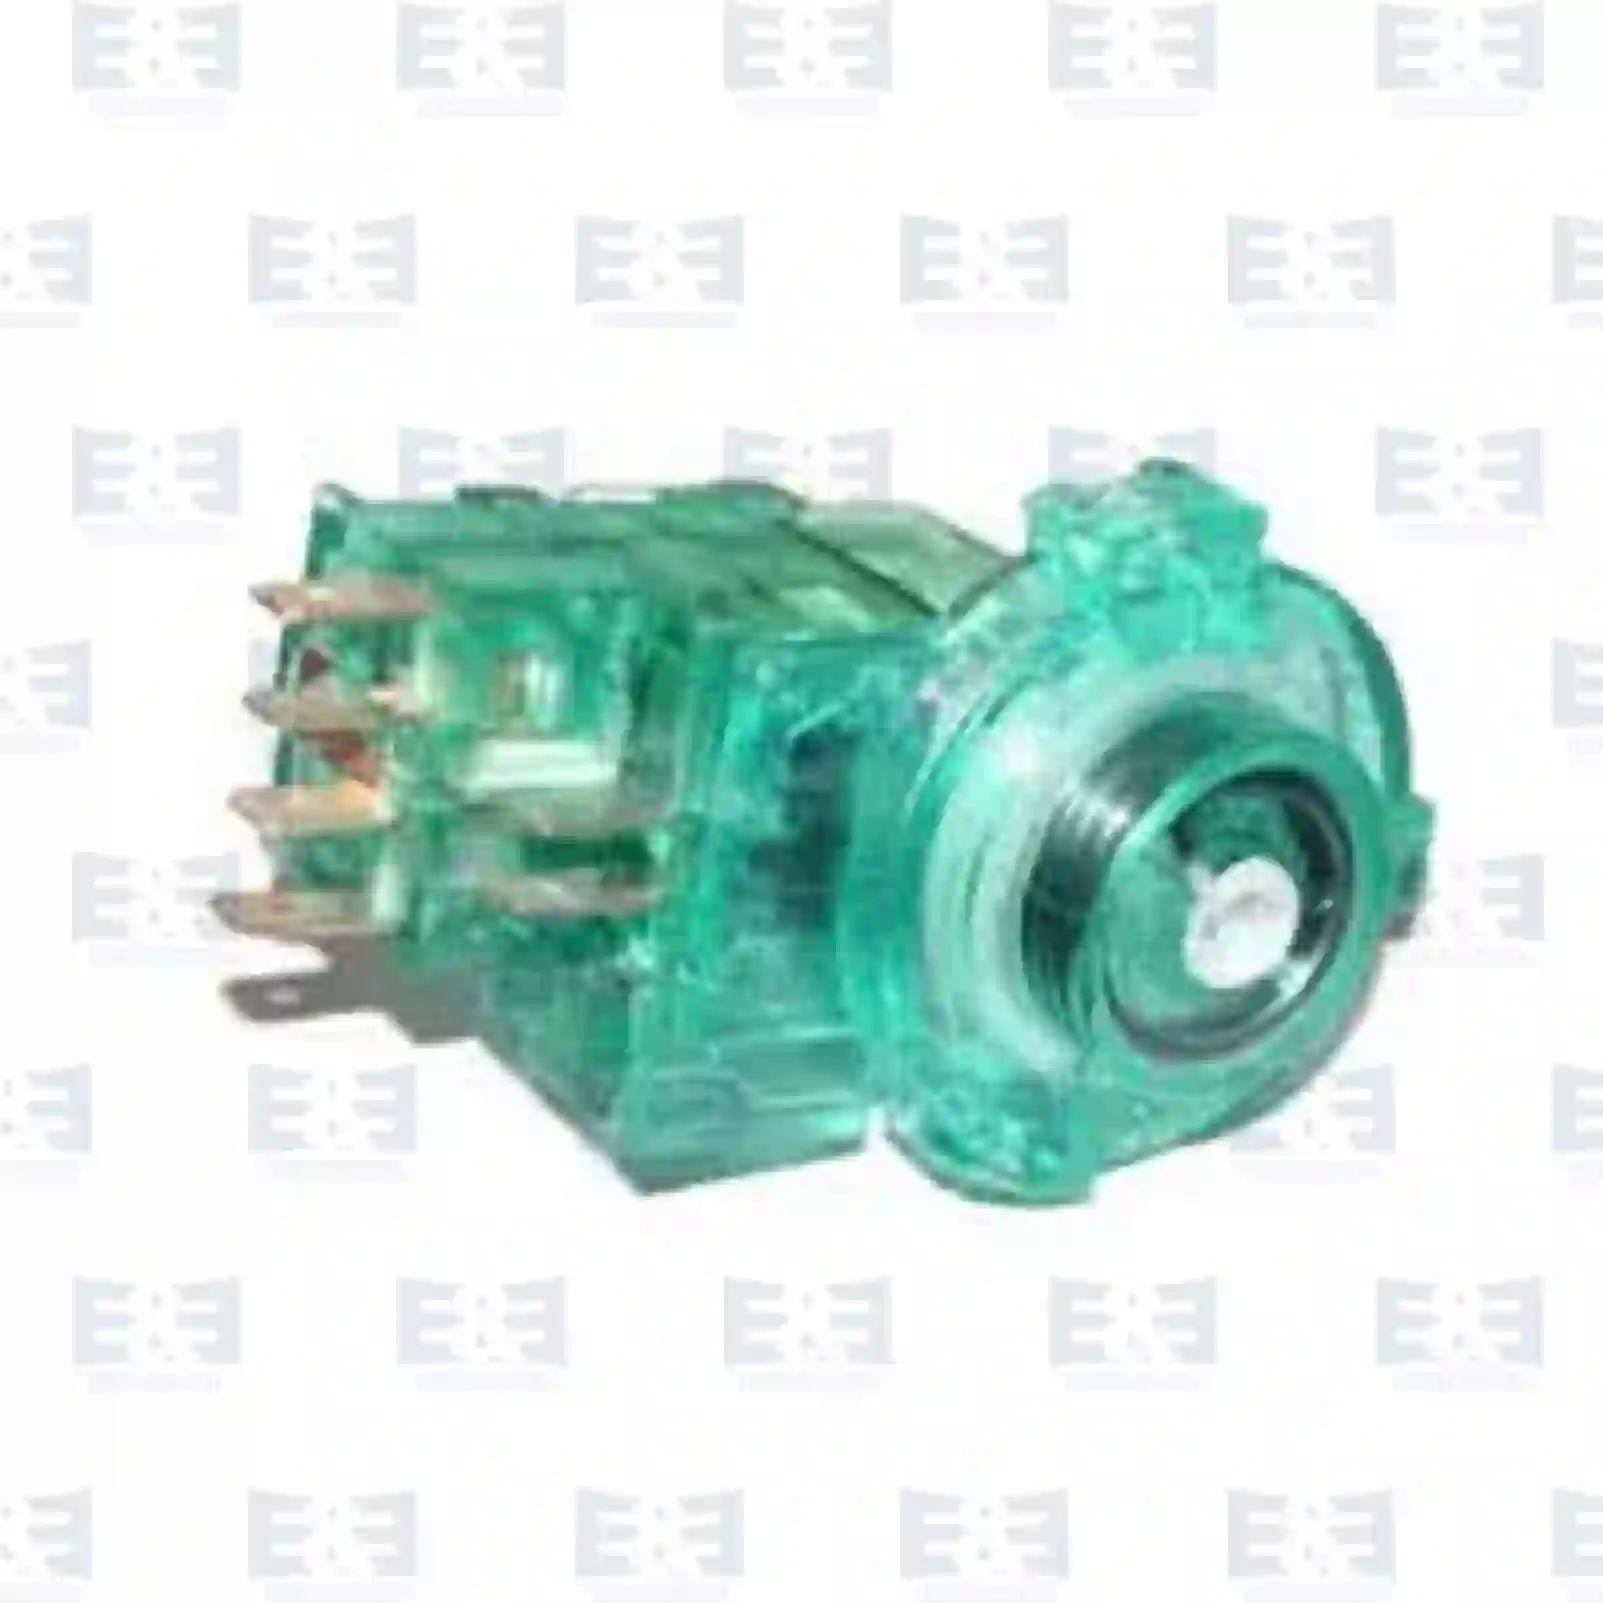  Ignition switch || E&E Truck Spare Parts | Truck Spare Parts, Auotomotive Spare Parts